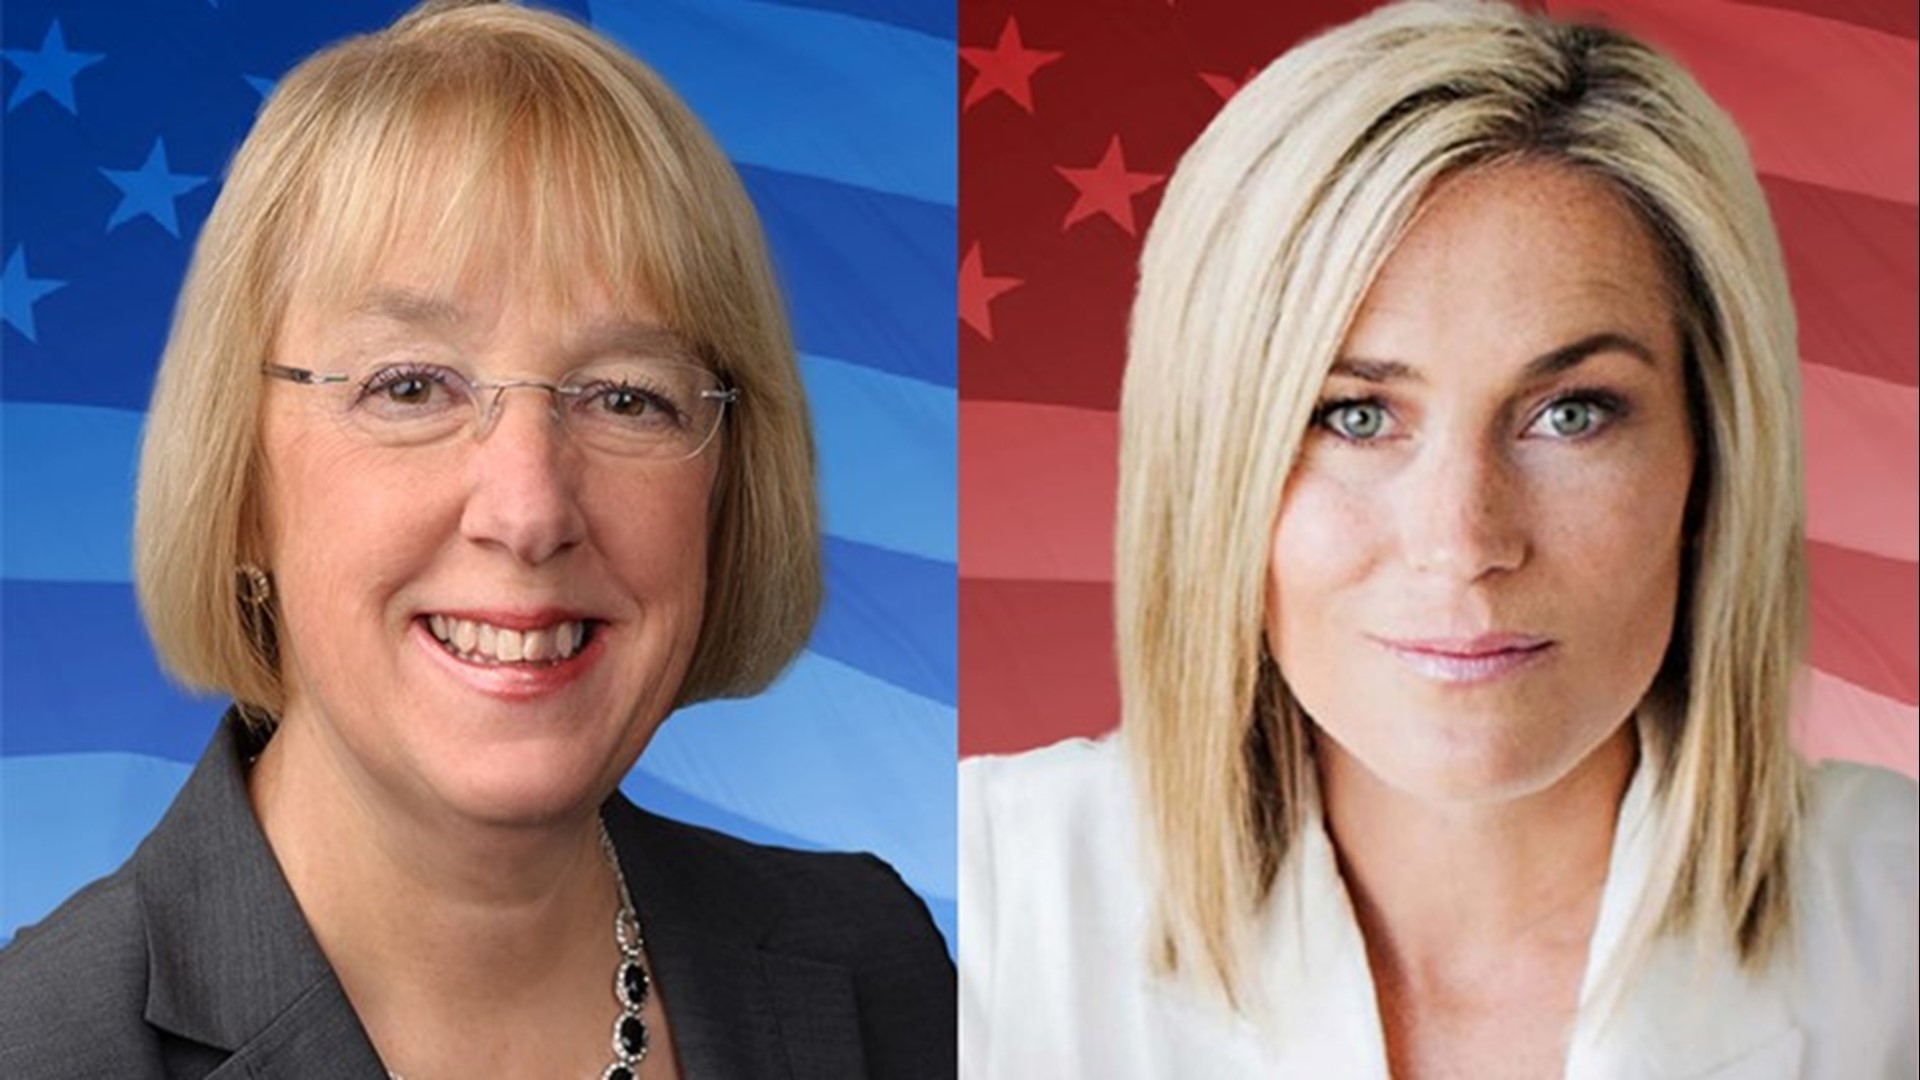 Sen. Patty Murray and Tiffany Smiley met at Gonzaga in a debate for a U.S. Senate seat.